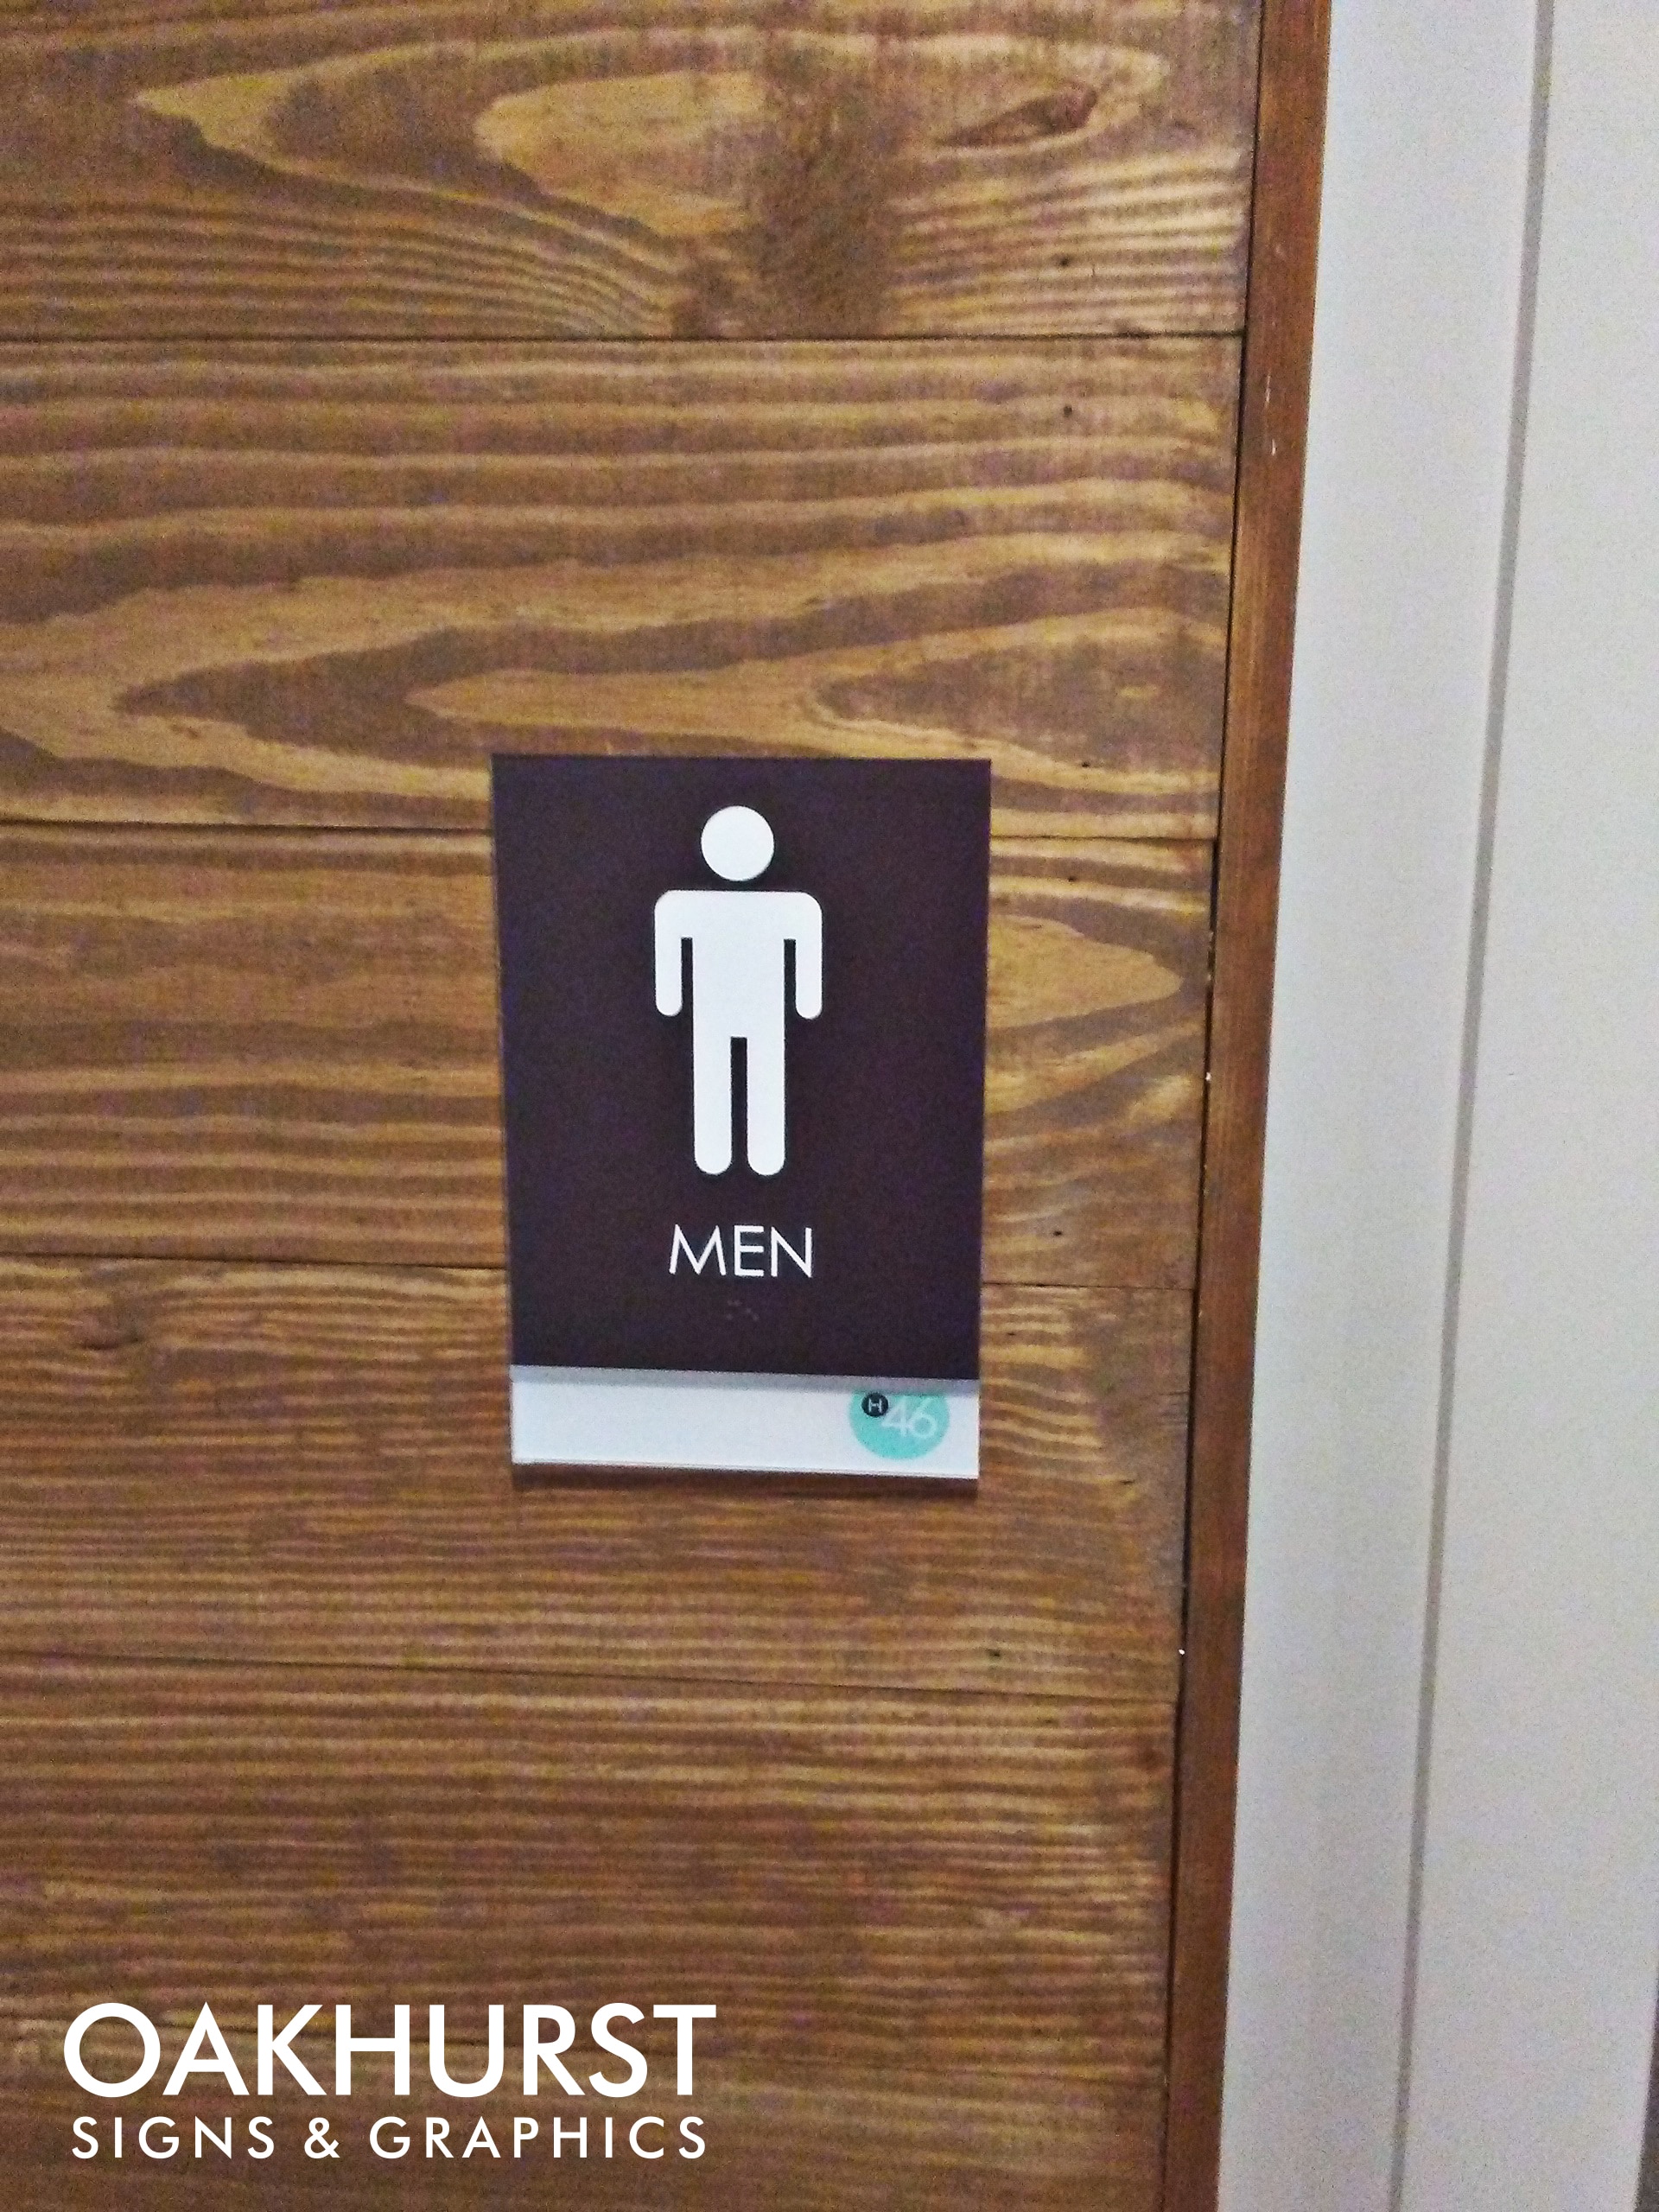 ADA signage labeling men's room